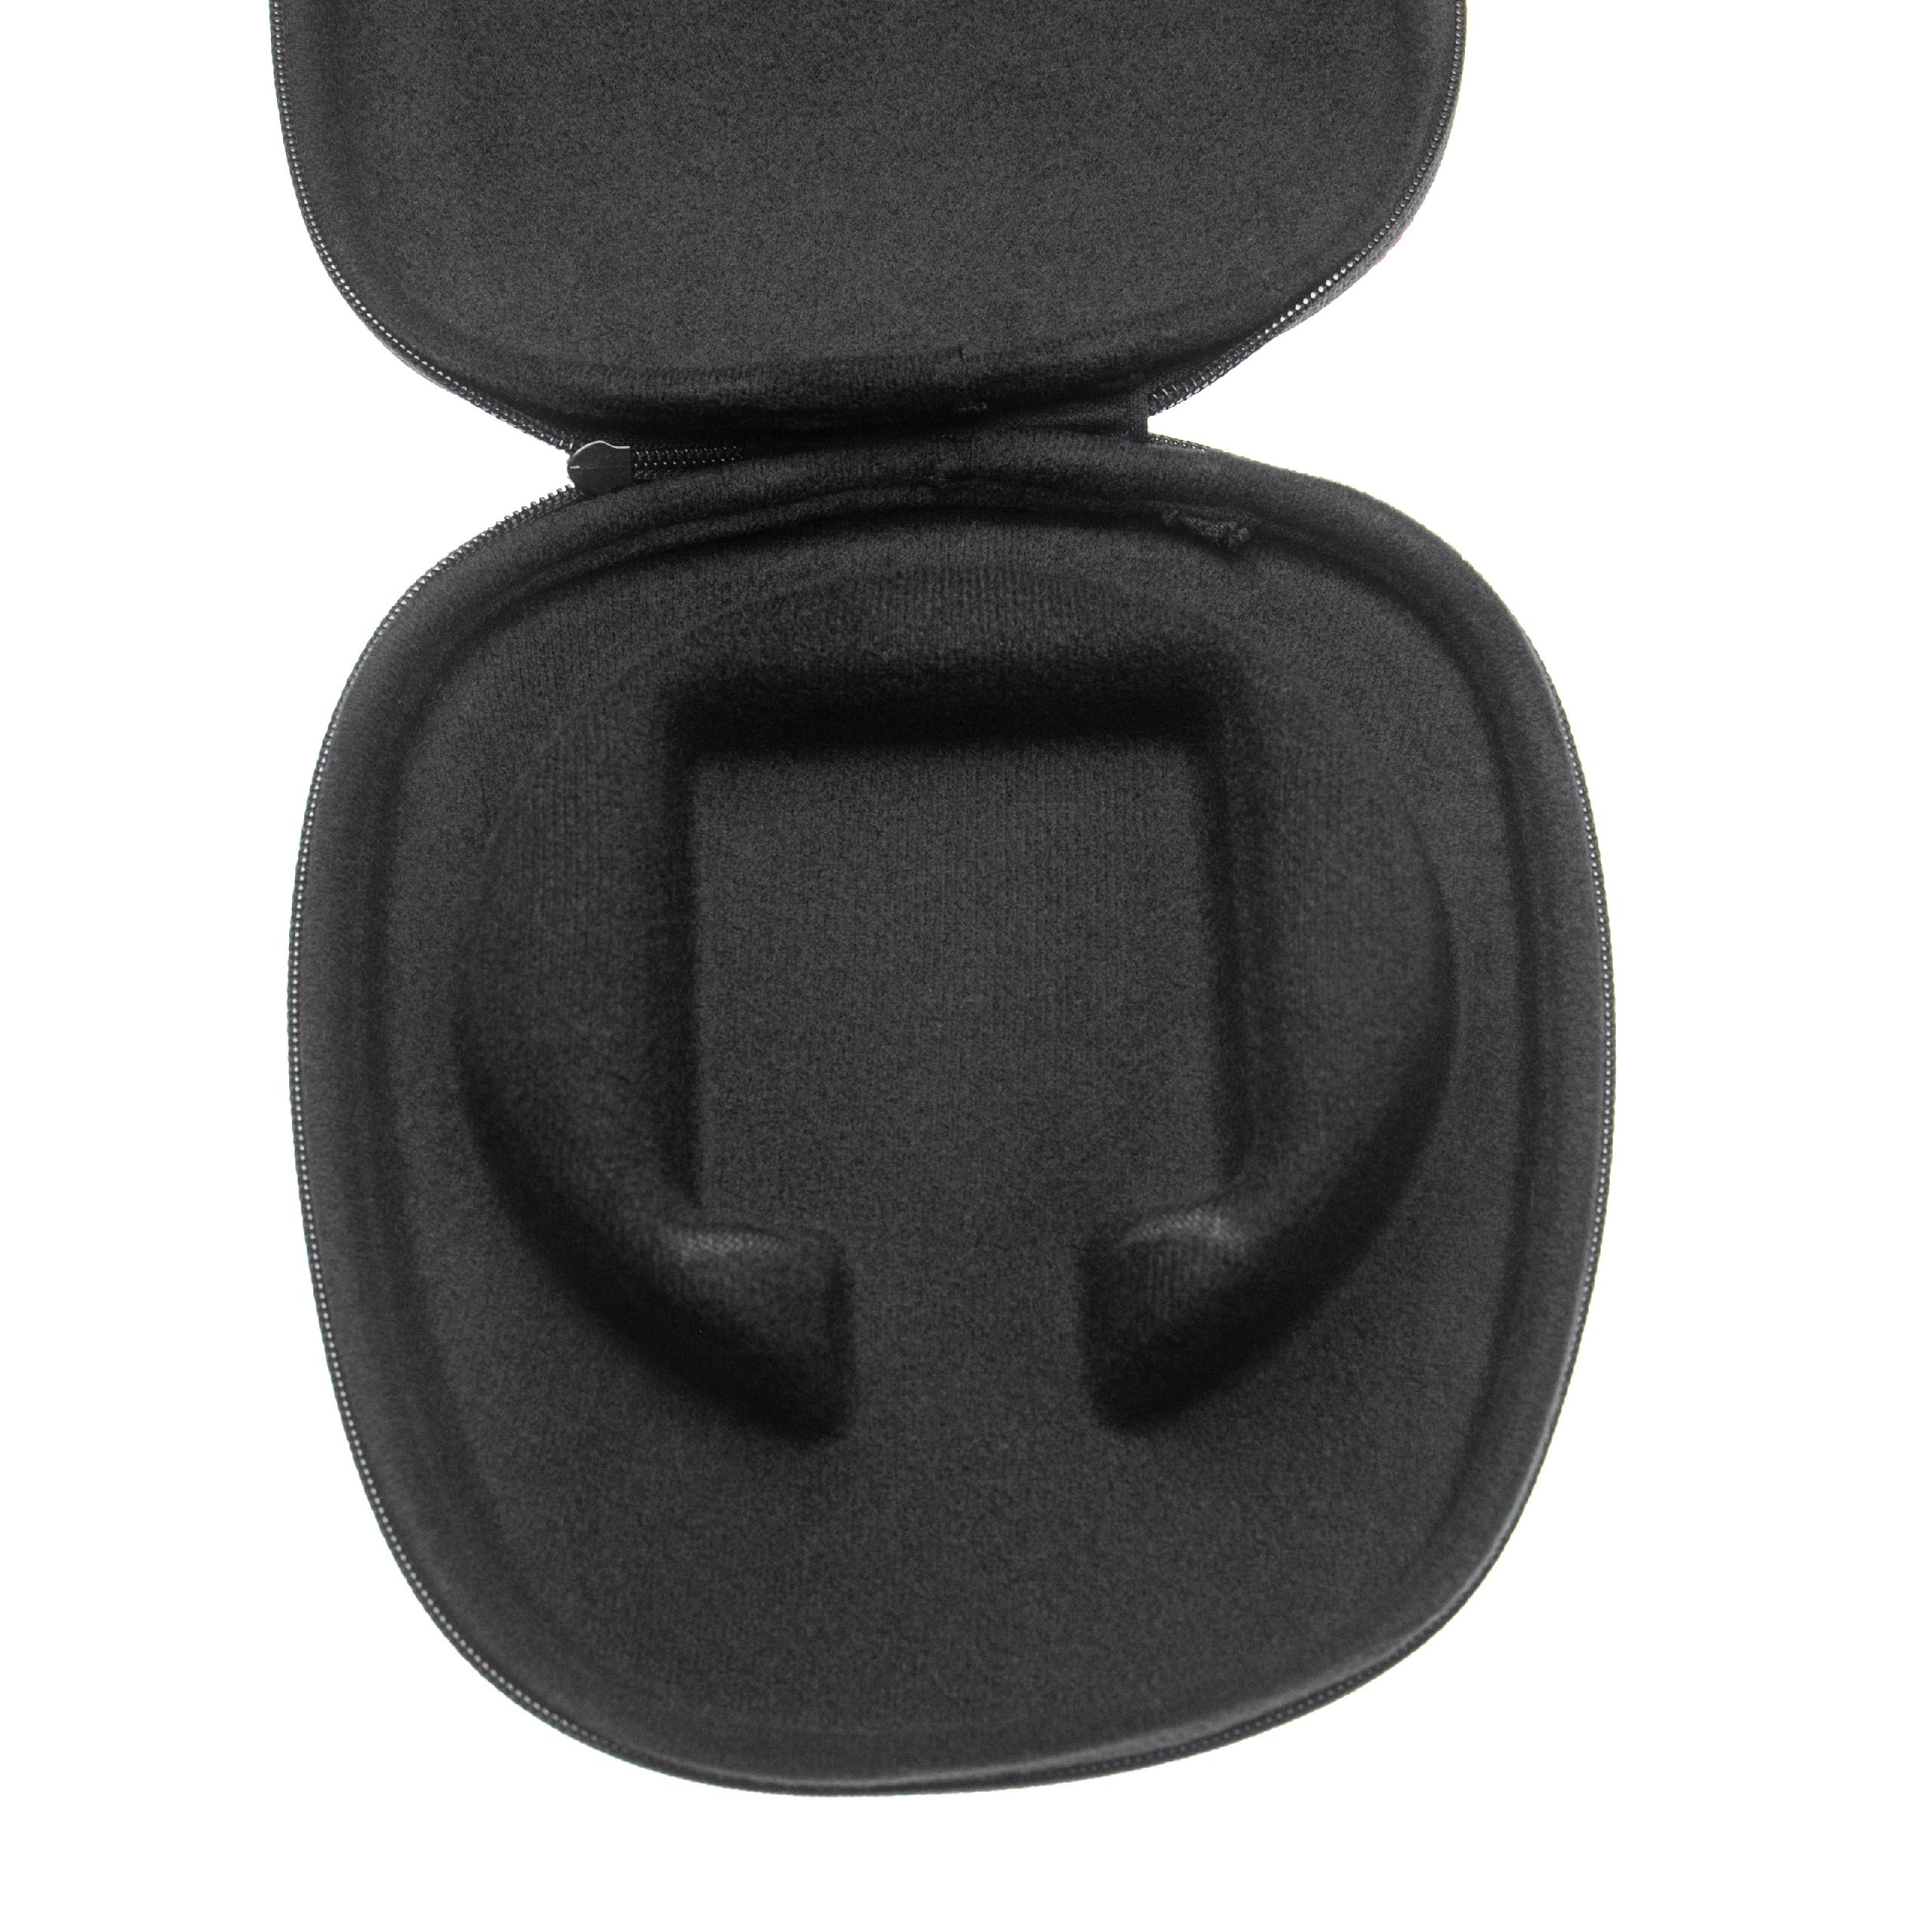 Transport Case suitable for Philips Headphones, Headset etc - Bag, neoprene, black